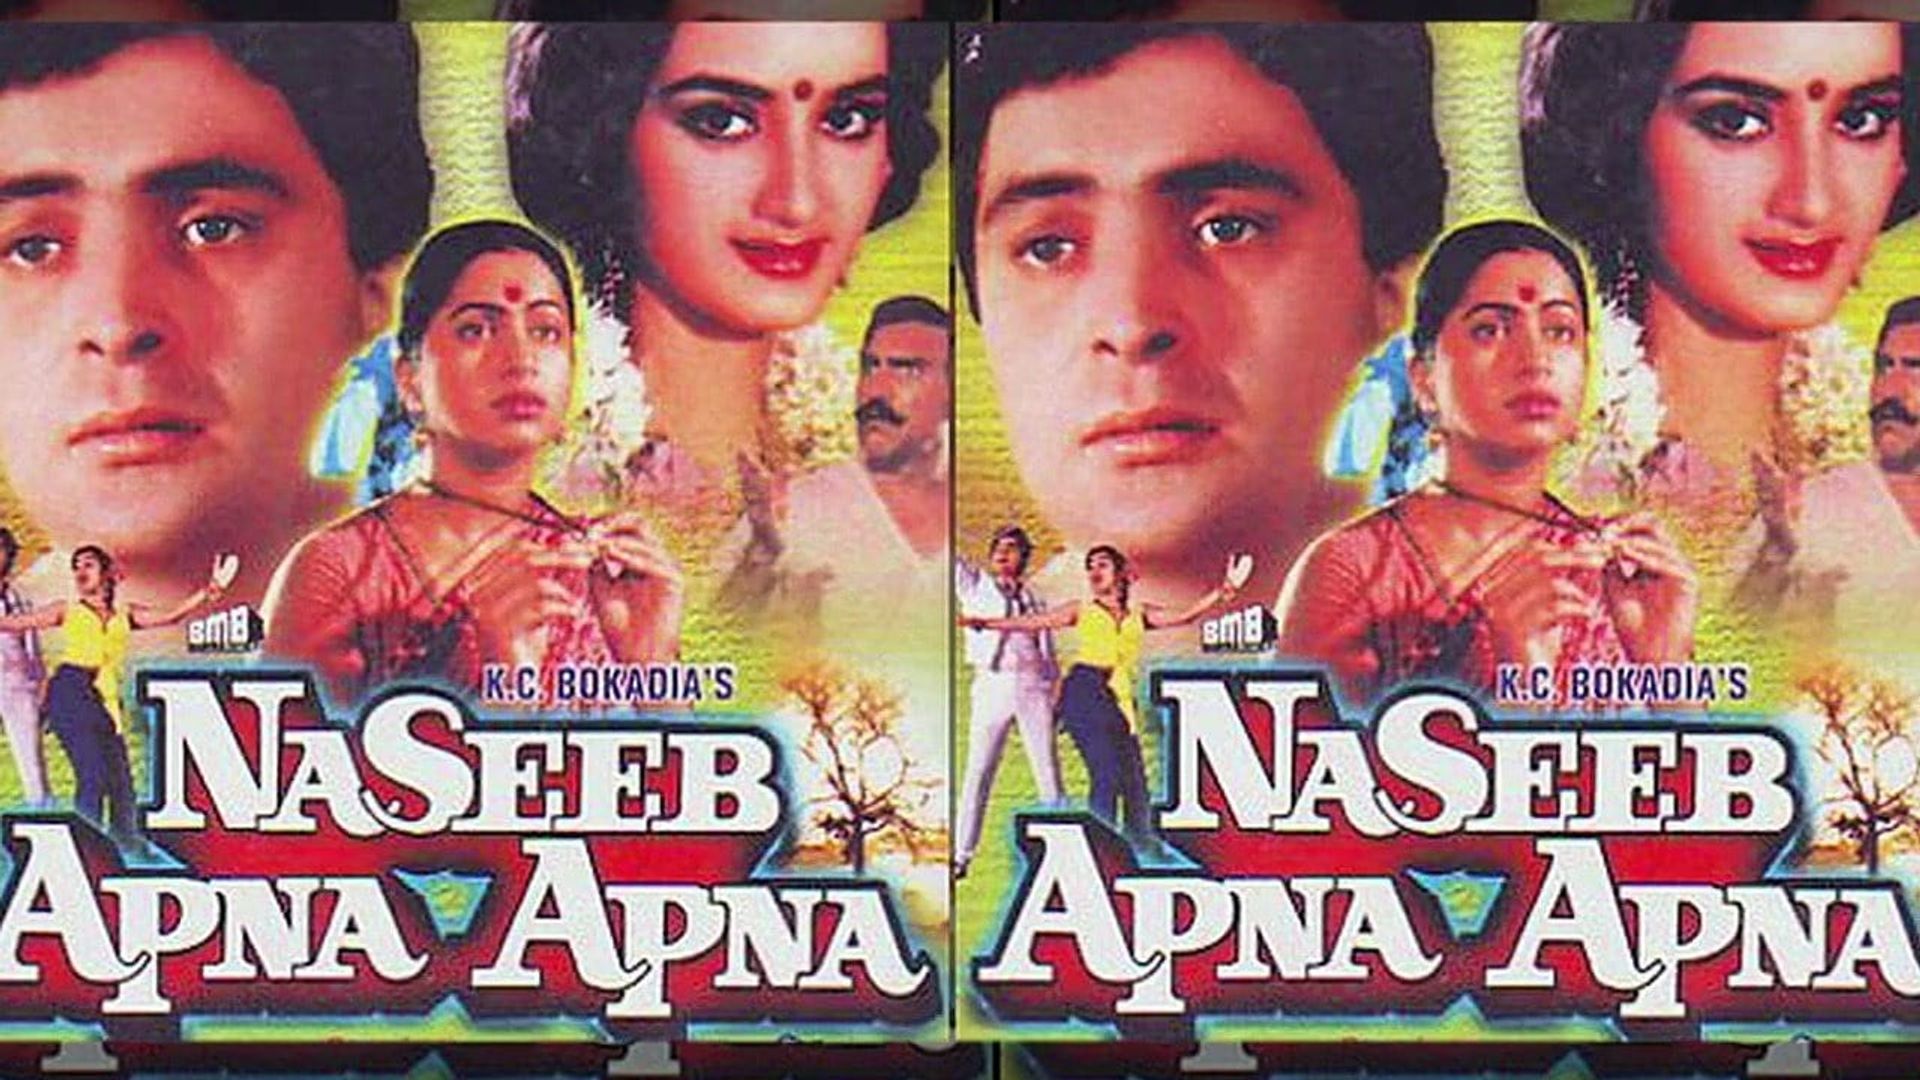 Naseeb Apna Apna background